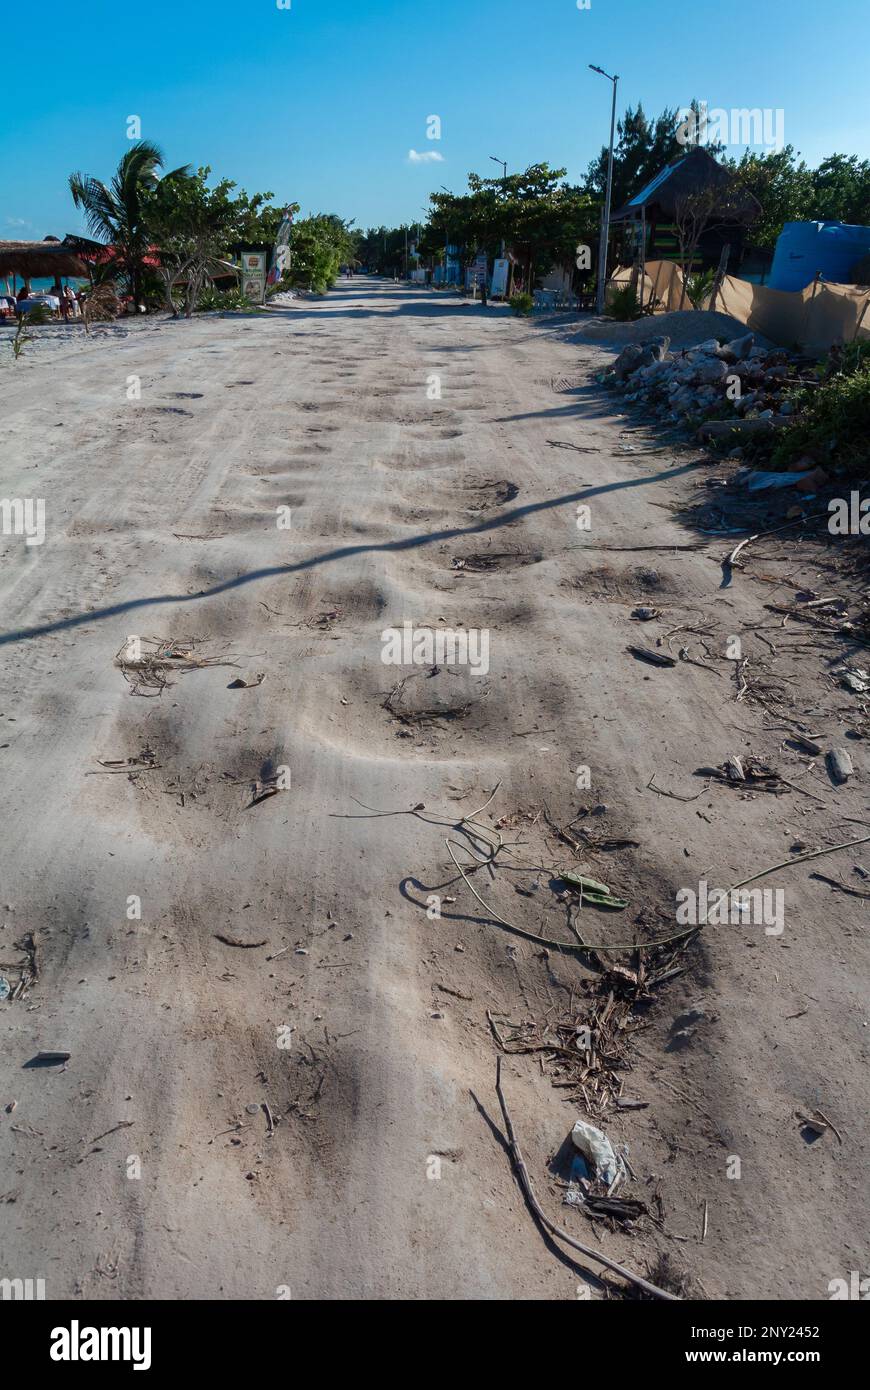 Mahahual, Quintana Roo, Mexiko, eine holprige, unbefestigte Straße entlang der Küste von Mahahual. Stockfoto